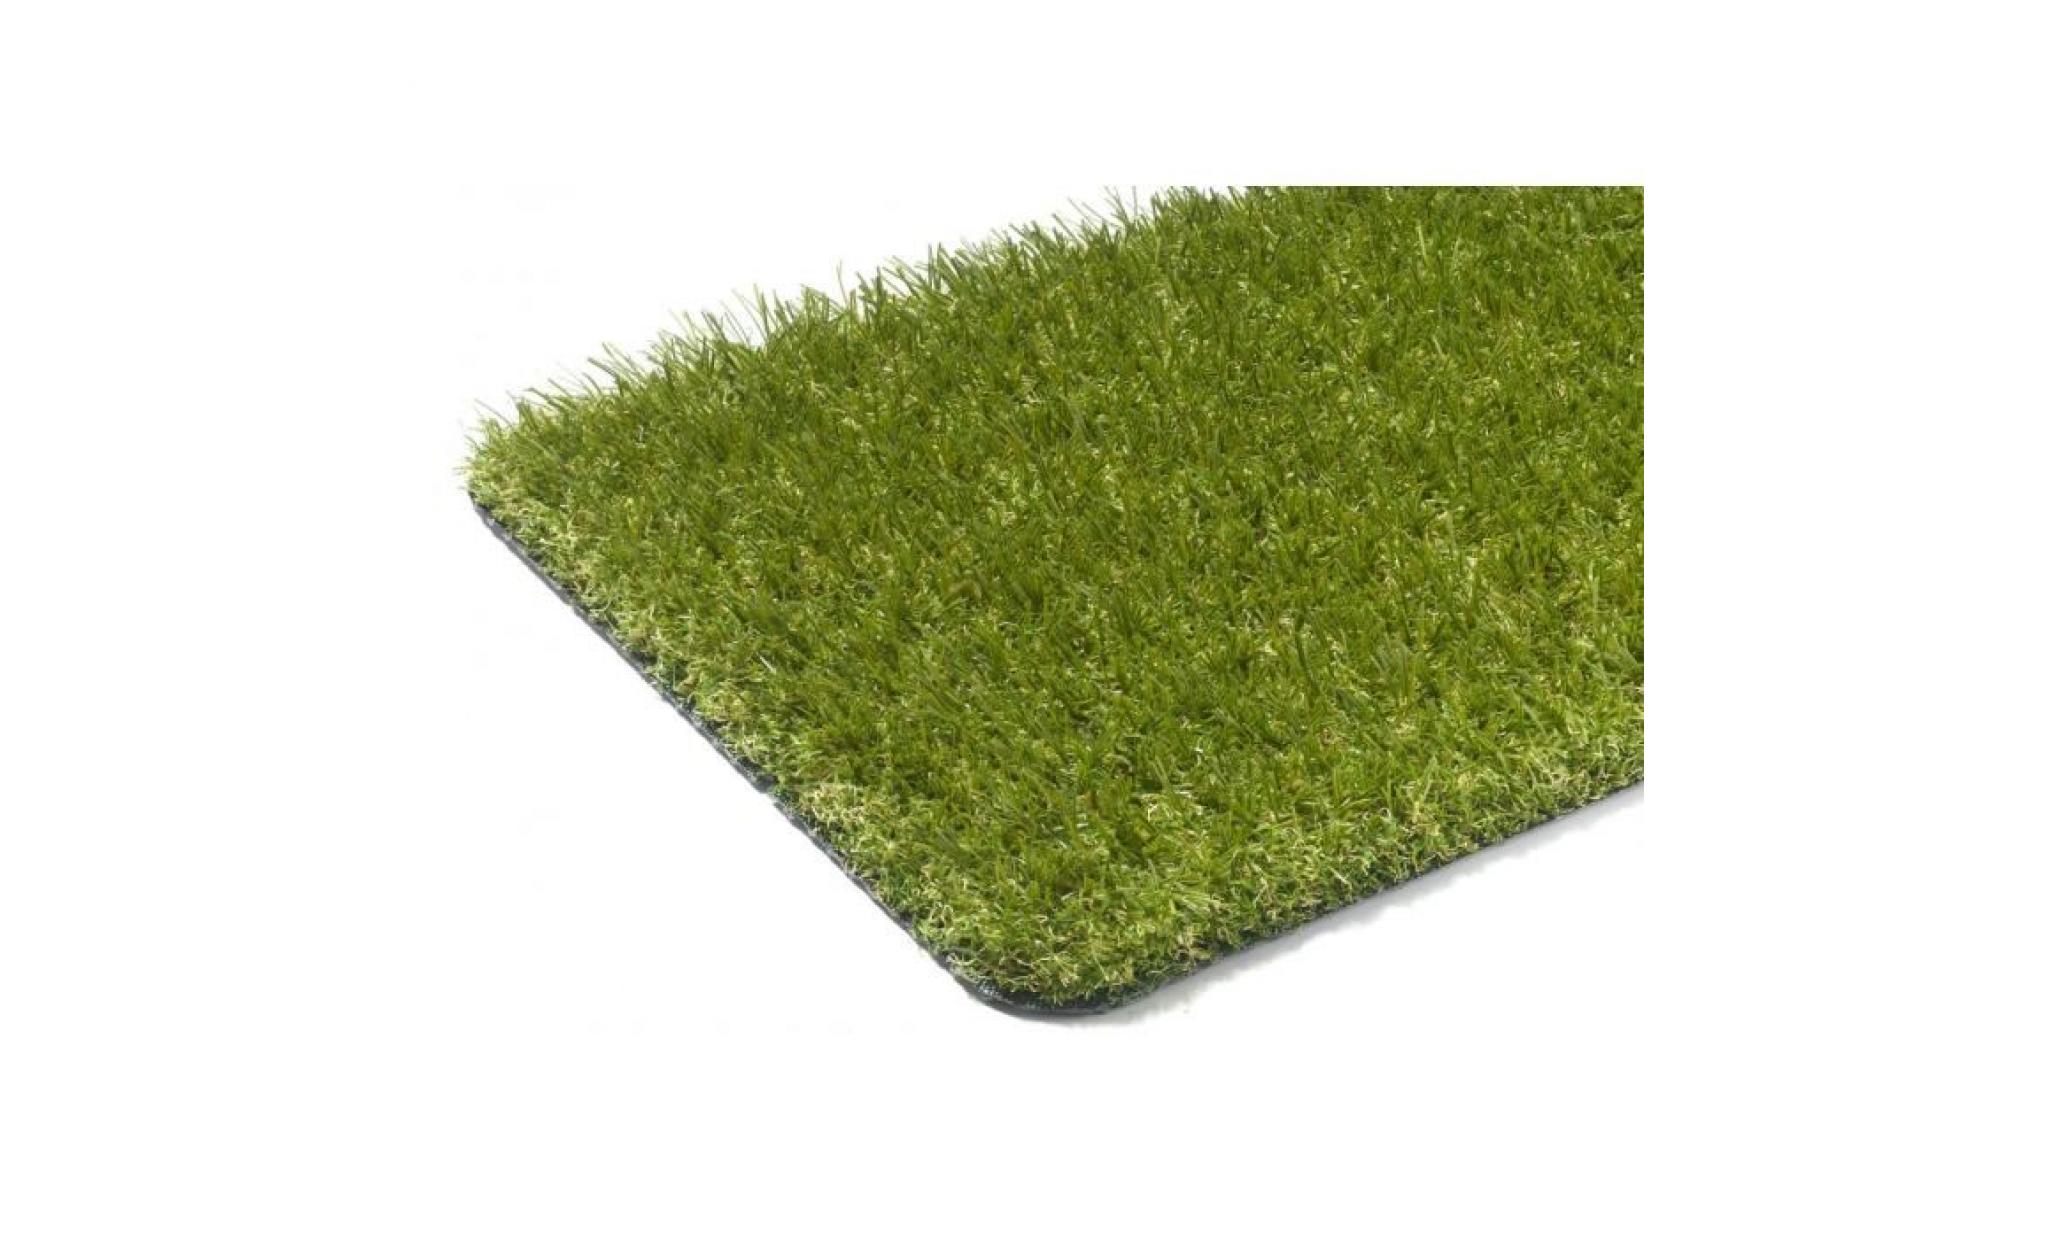 wembley   tapis type luxe gazon artificiel – pour jardin, terrasse, balcon   vert  [200x350 cm]